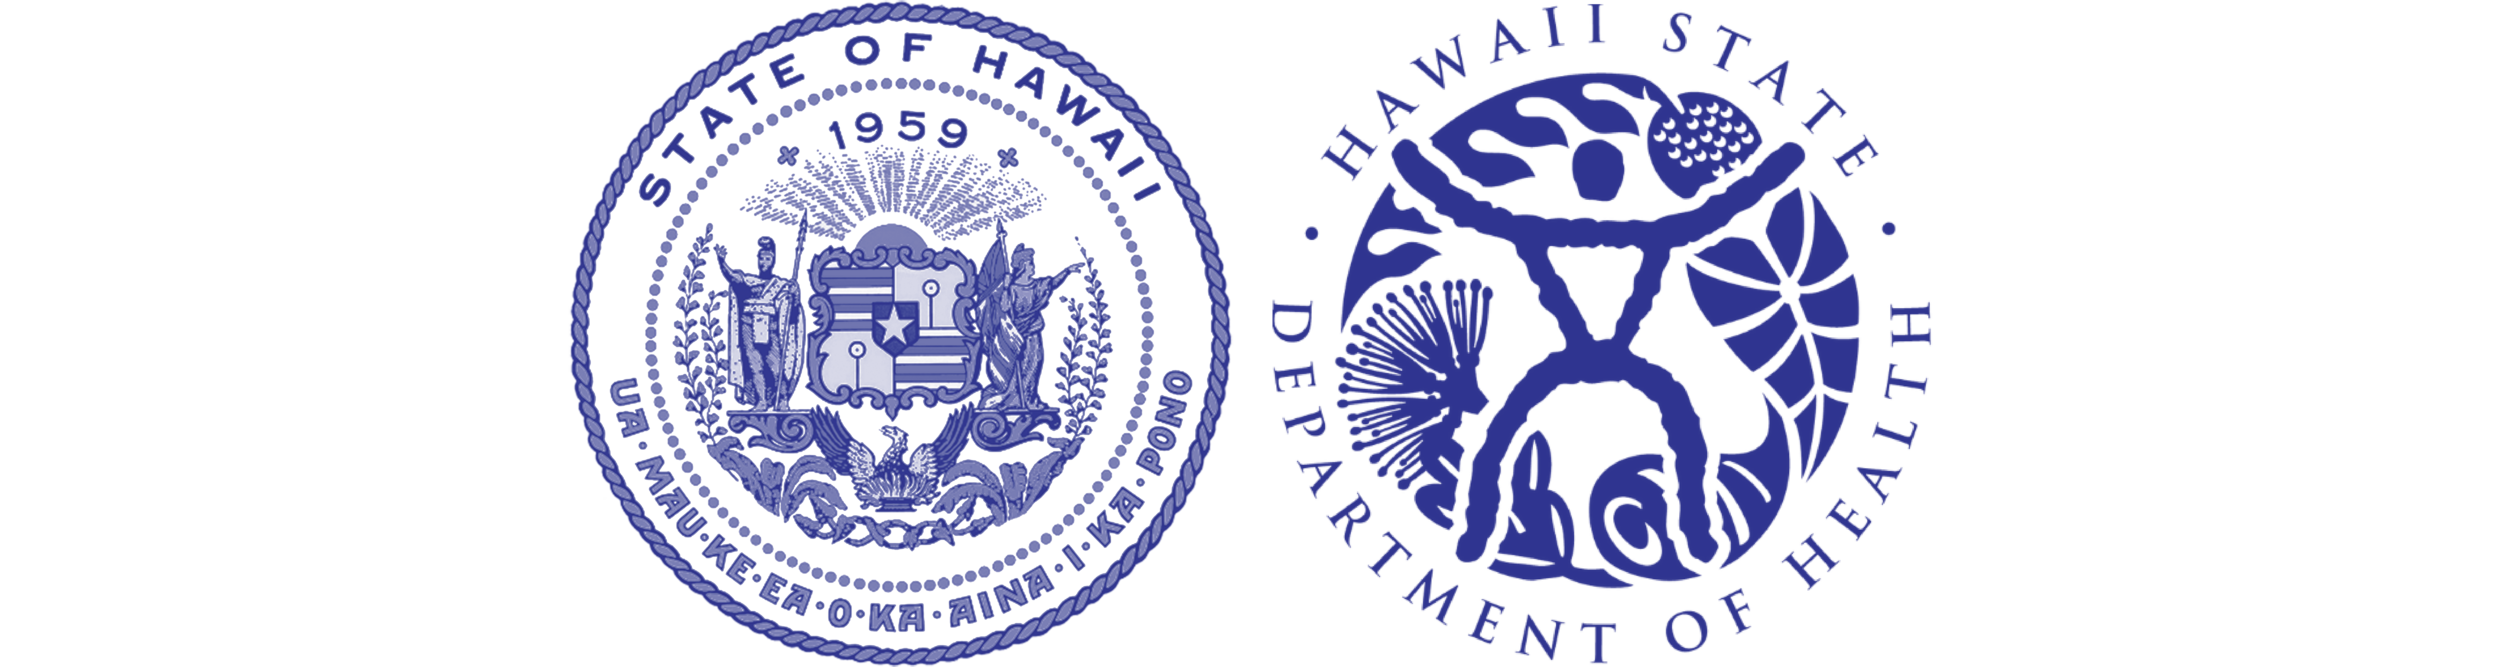 HPHA-ressourcen-logo-Staat-Hawaii-DOH.png